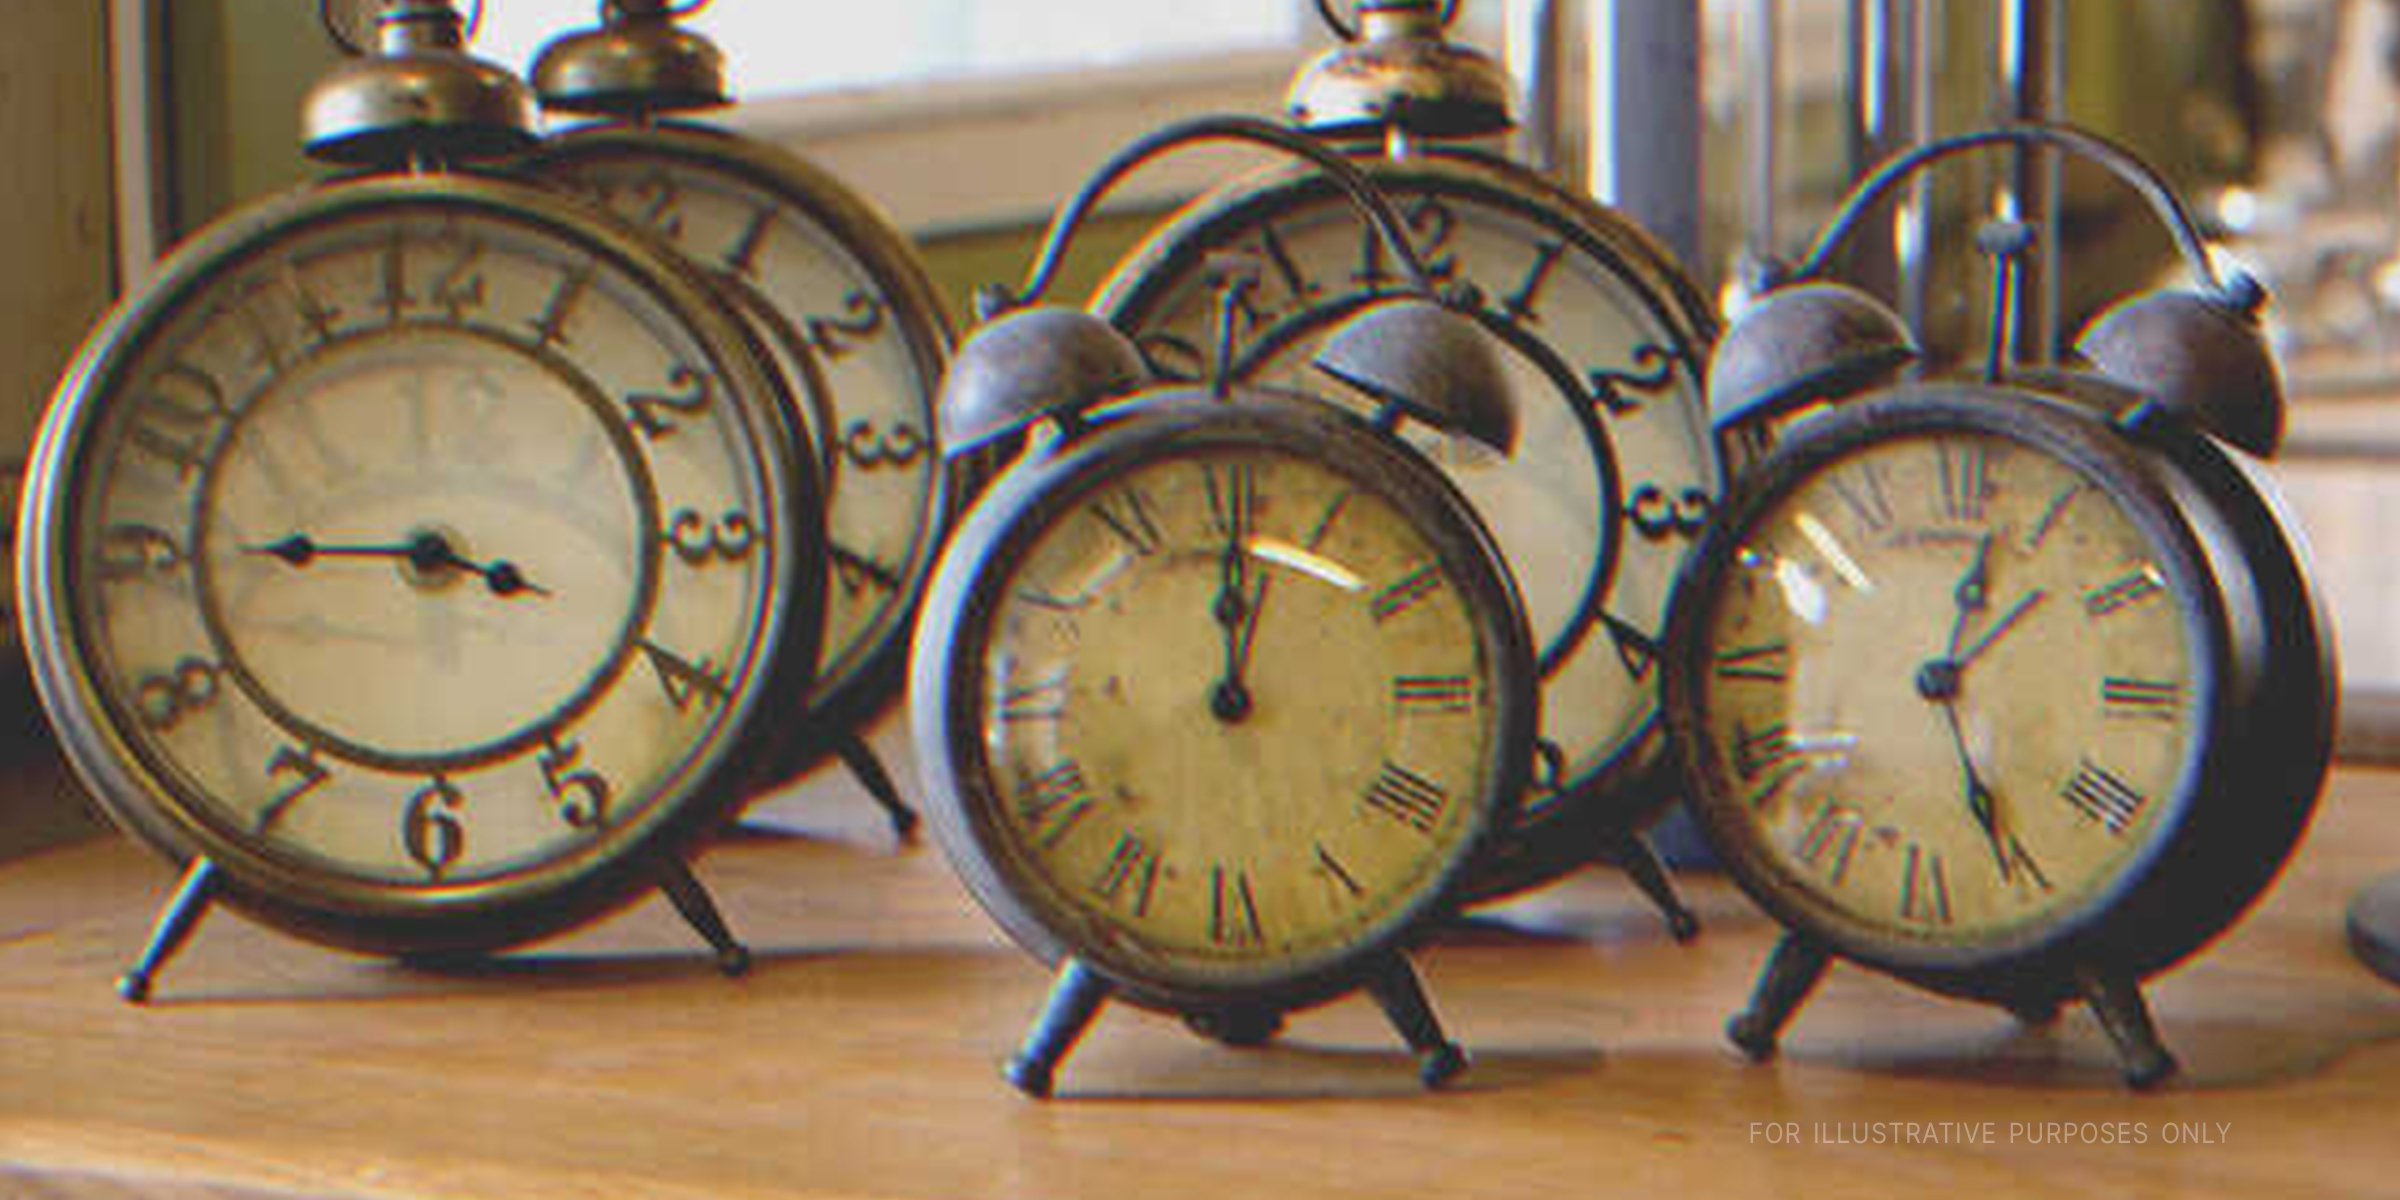 Five vintage alarm clocks on a table | Shutterstock